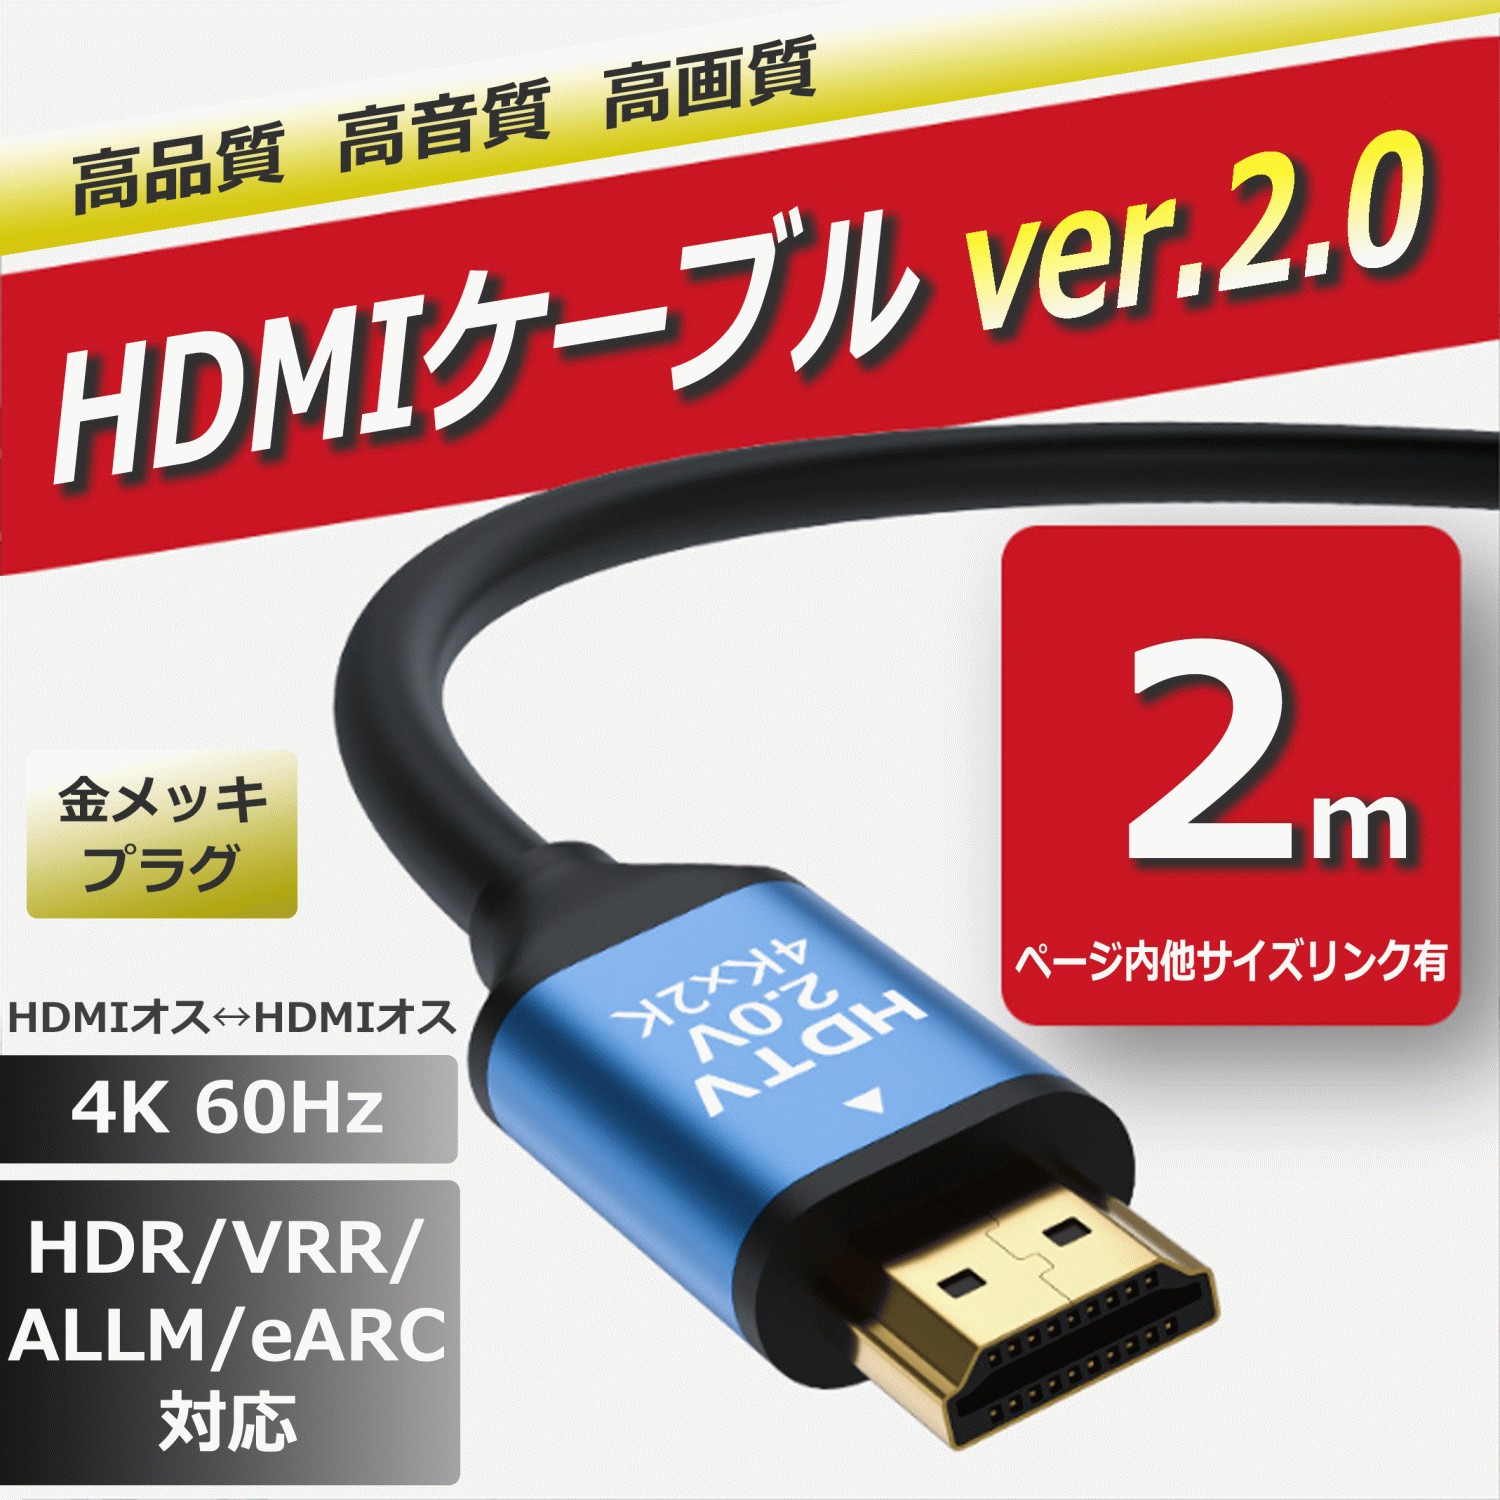 HDMIケーブル2m 4K HDR VRR ALLM eARC 3D 対応 PC パソコン テレビ オーディオ HDMI 2.0 ケーブル オス  フルハイビジョン 高品質 送料無料 1.5m 3m hdmi :hdmi-2:SHOP JTM 通販 